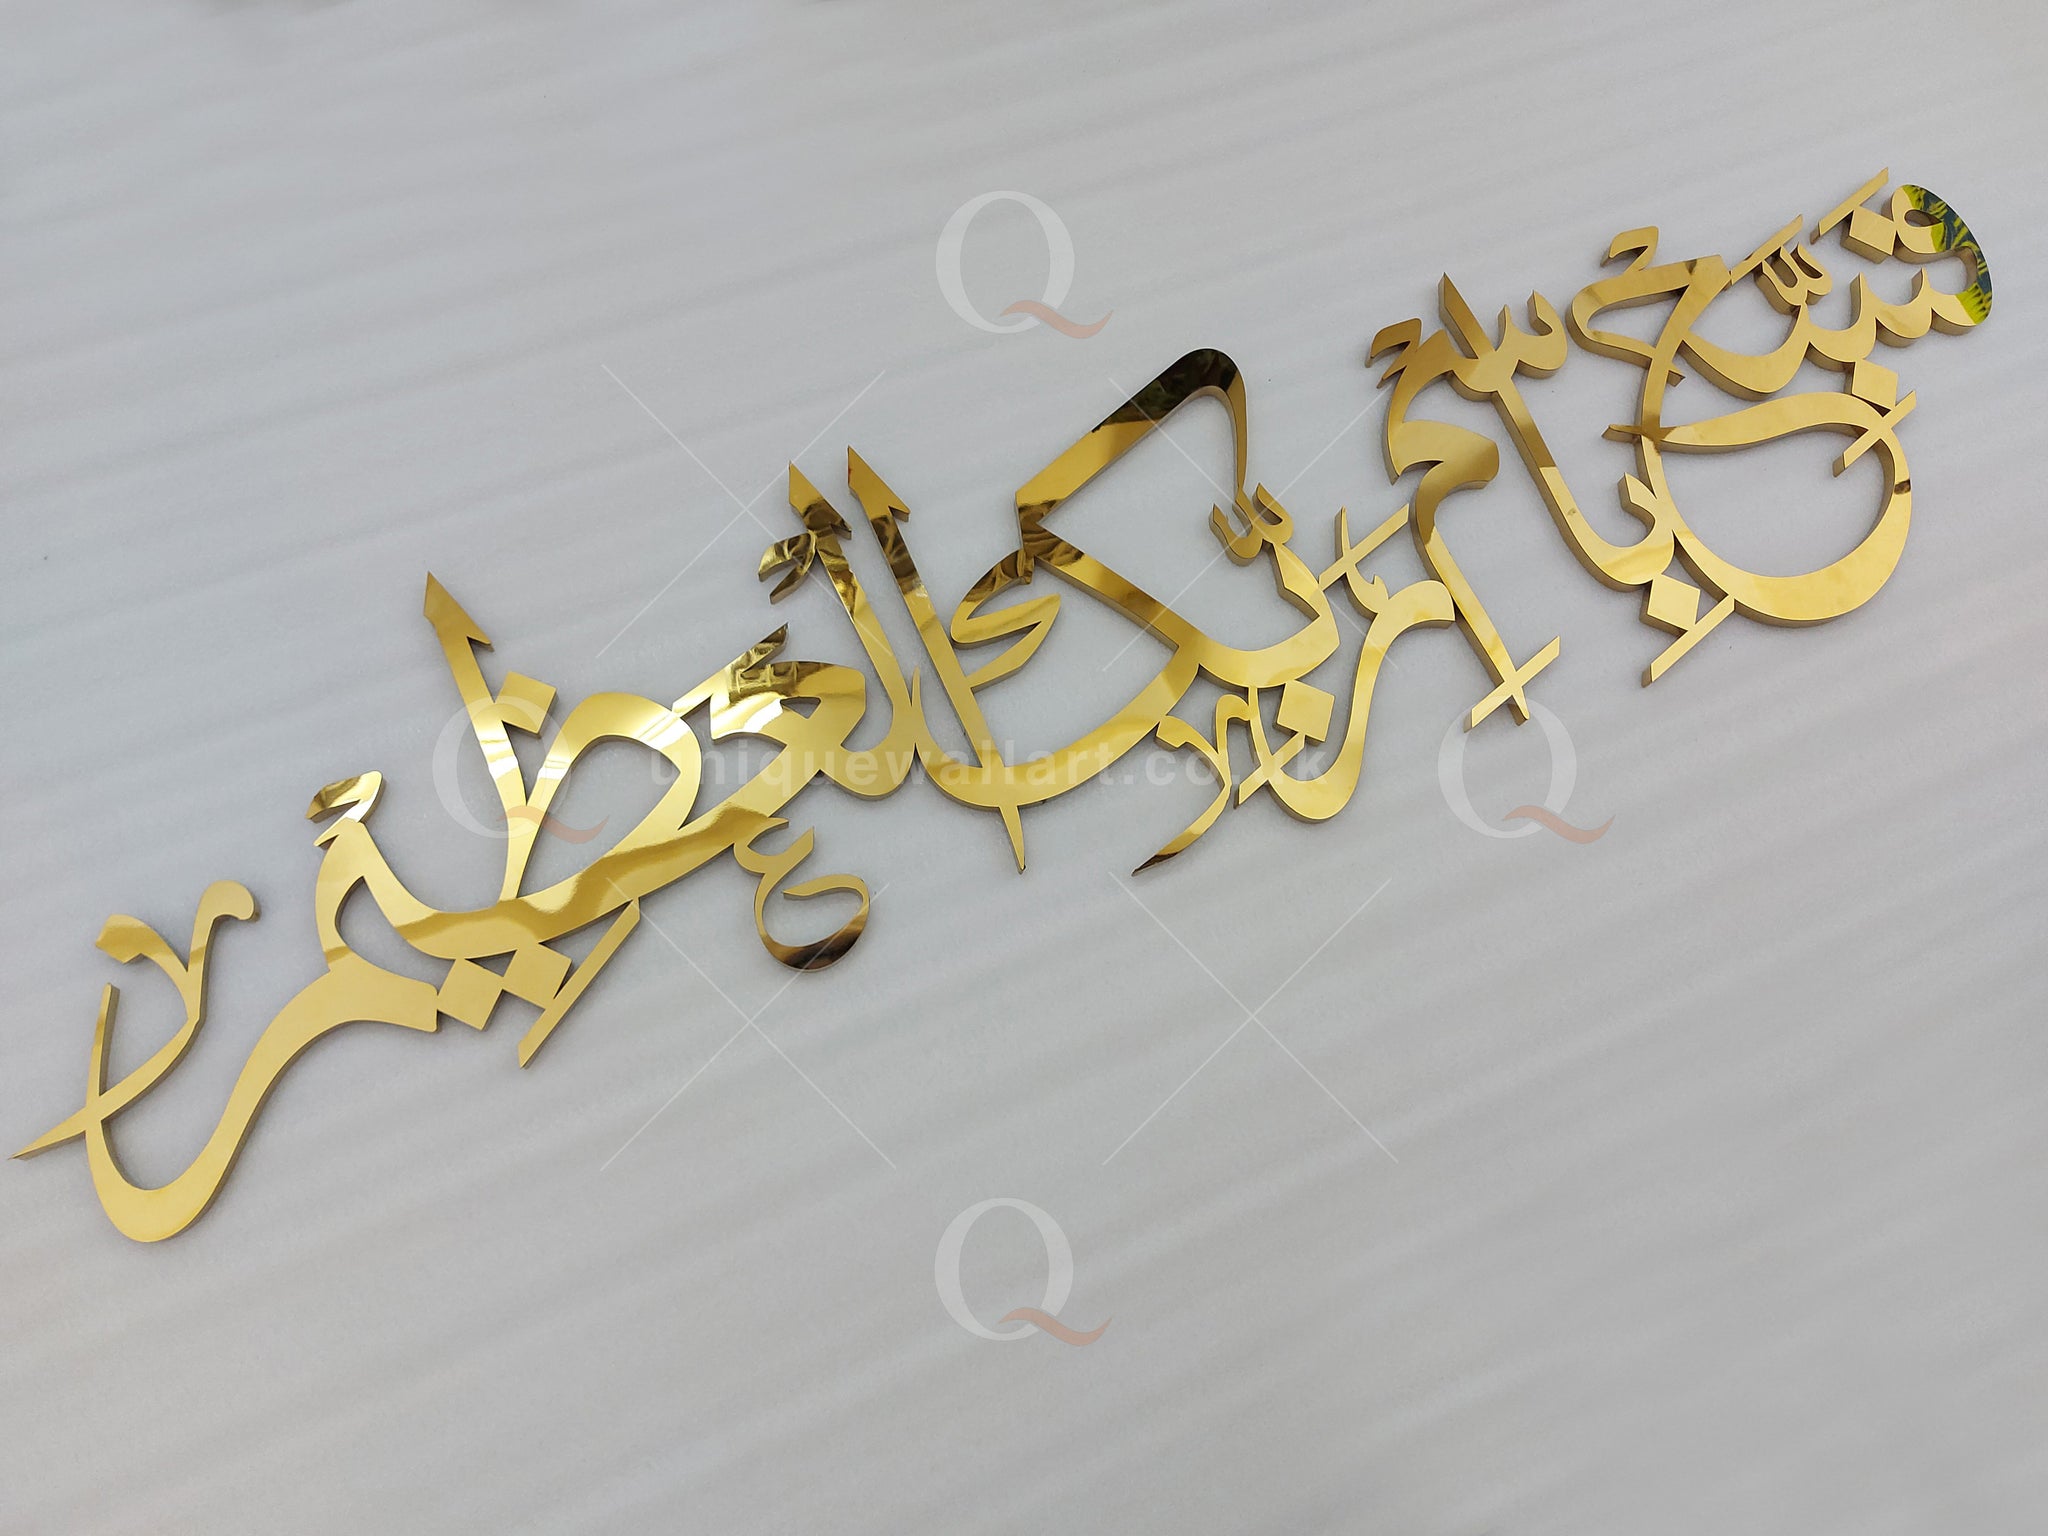 Fasabbih Bismi Rabbikal Azim 3D Wall Art Calligraphy